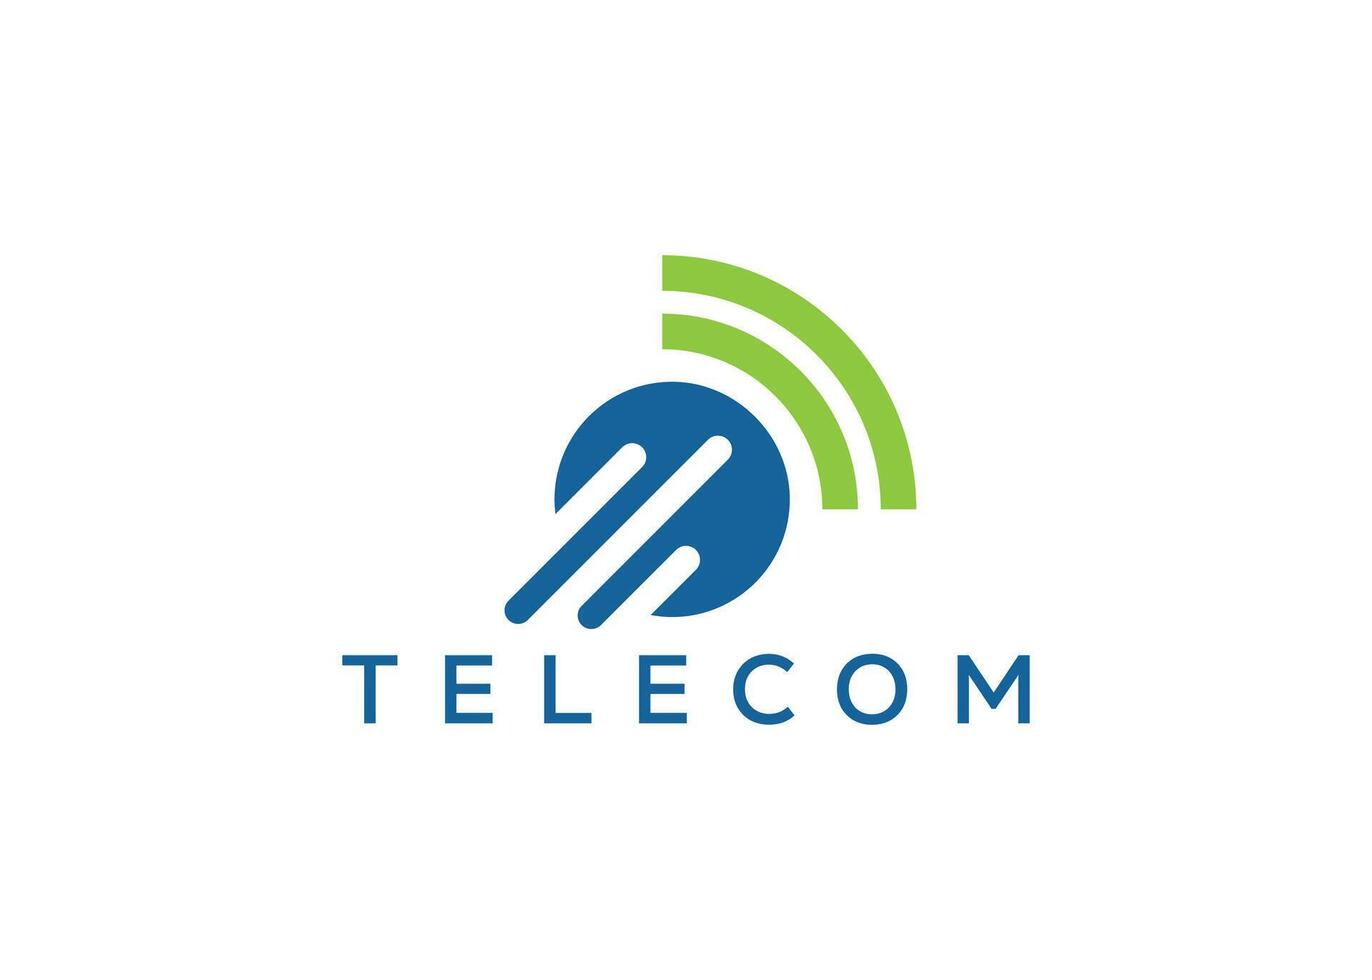 Minimalist dynamic telecom logo design vector template. Modern telecommunication logo